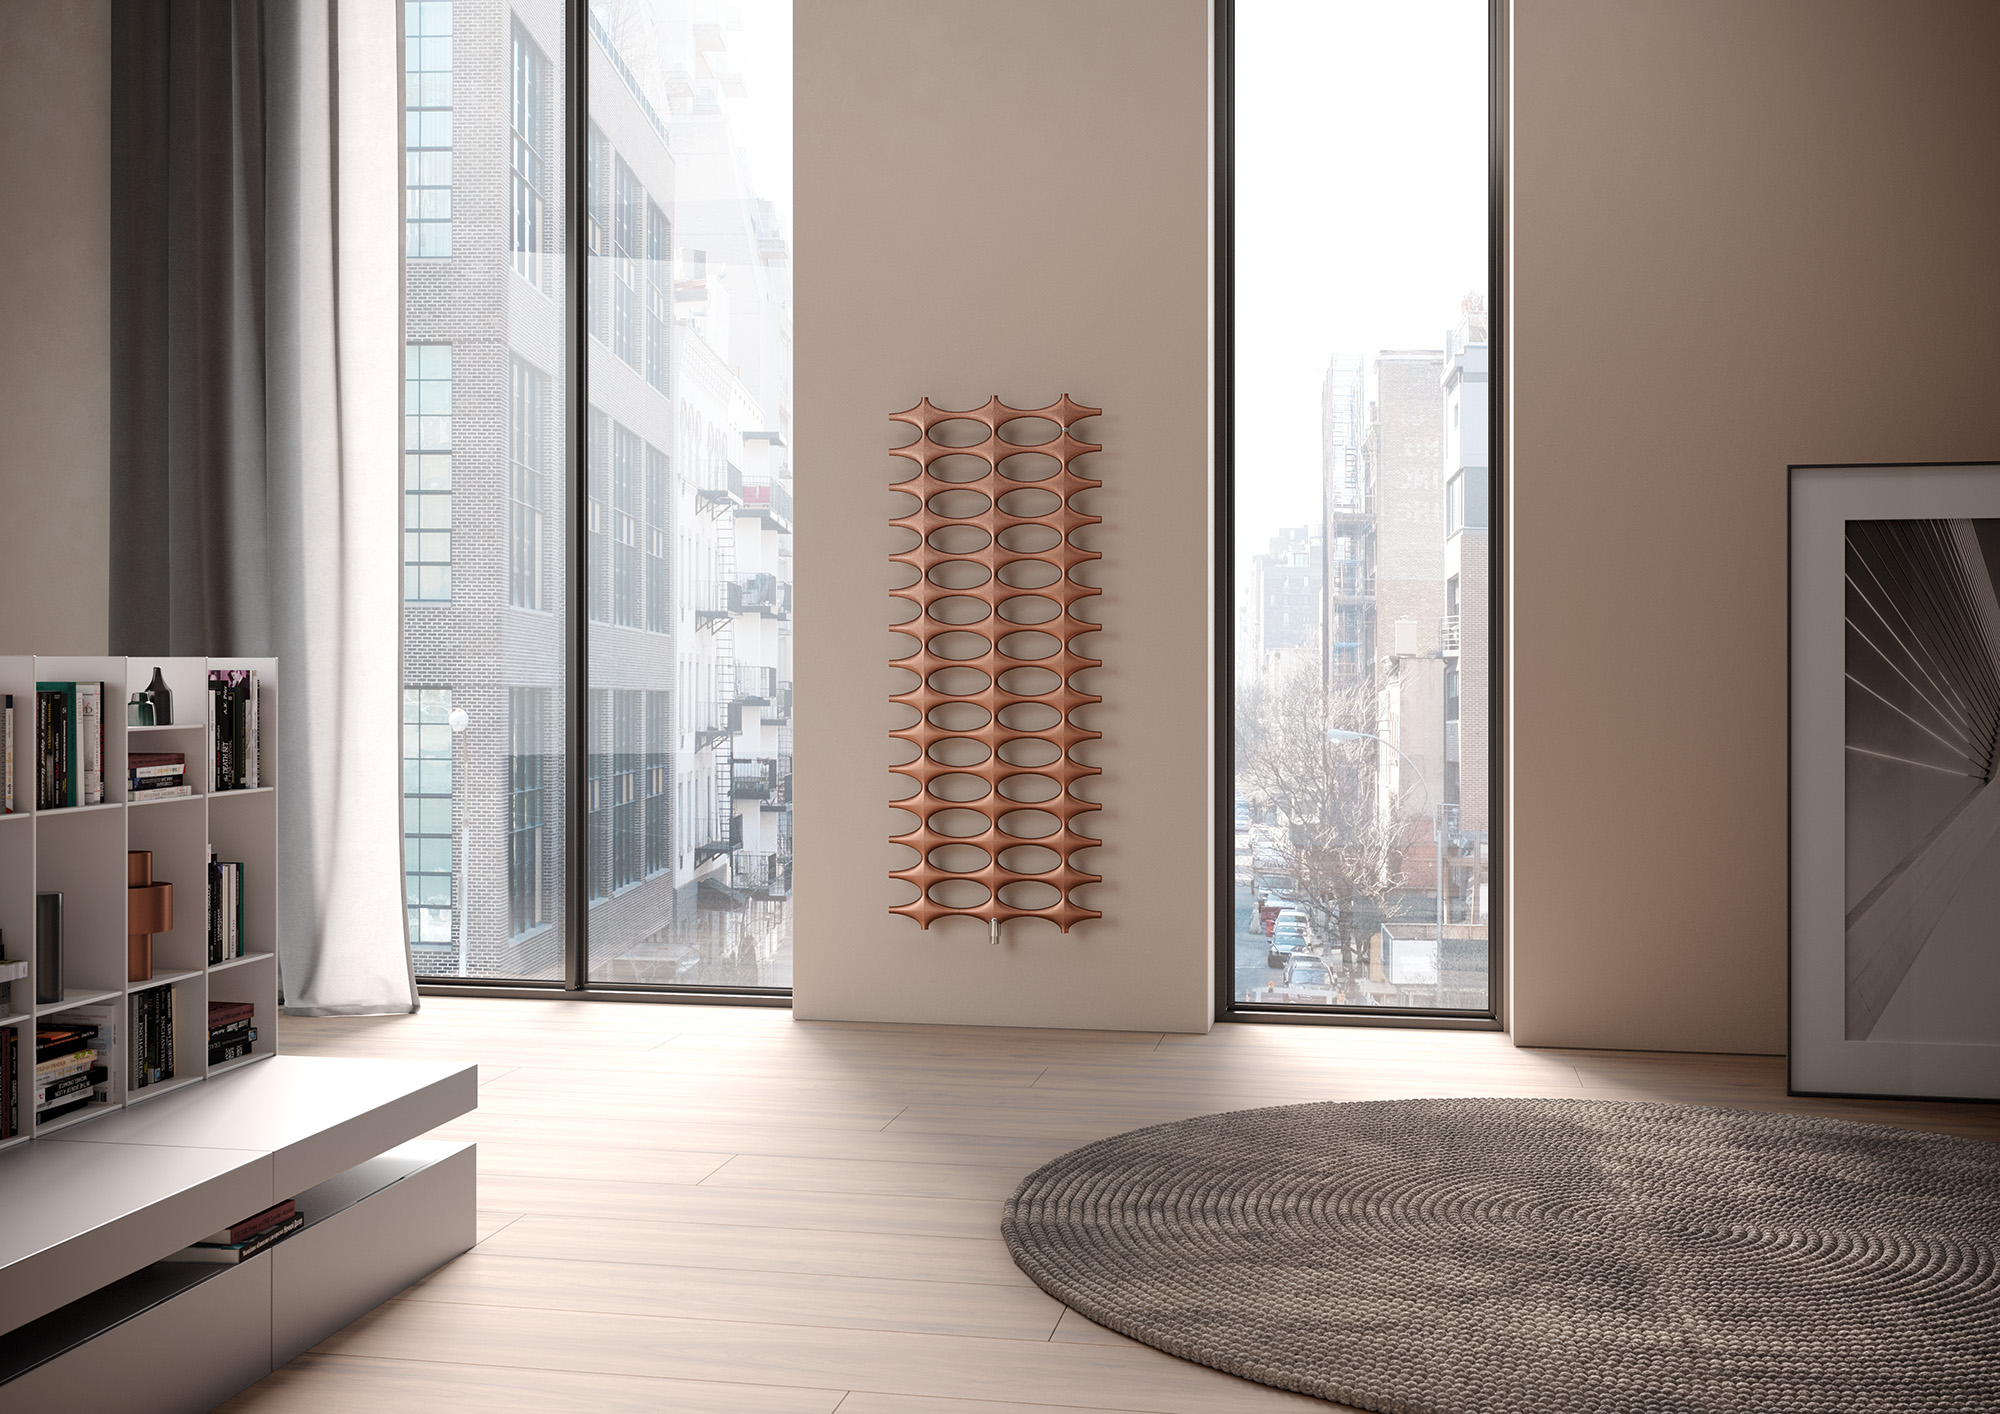 Kermi Ideos design and bathroom radiators – a unique and distinctive radiator design based on a modular approach.